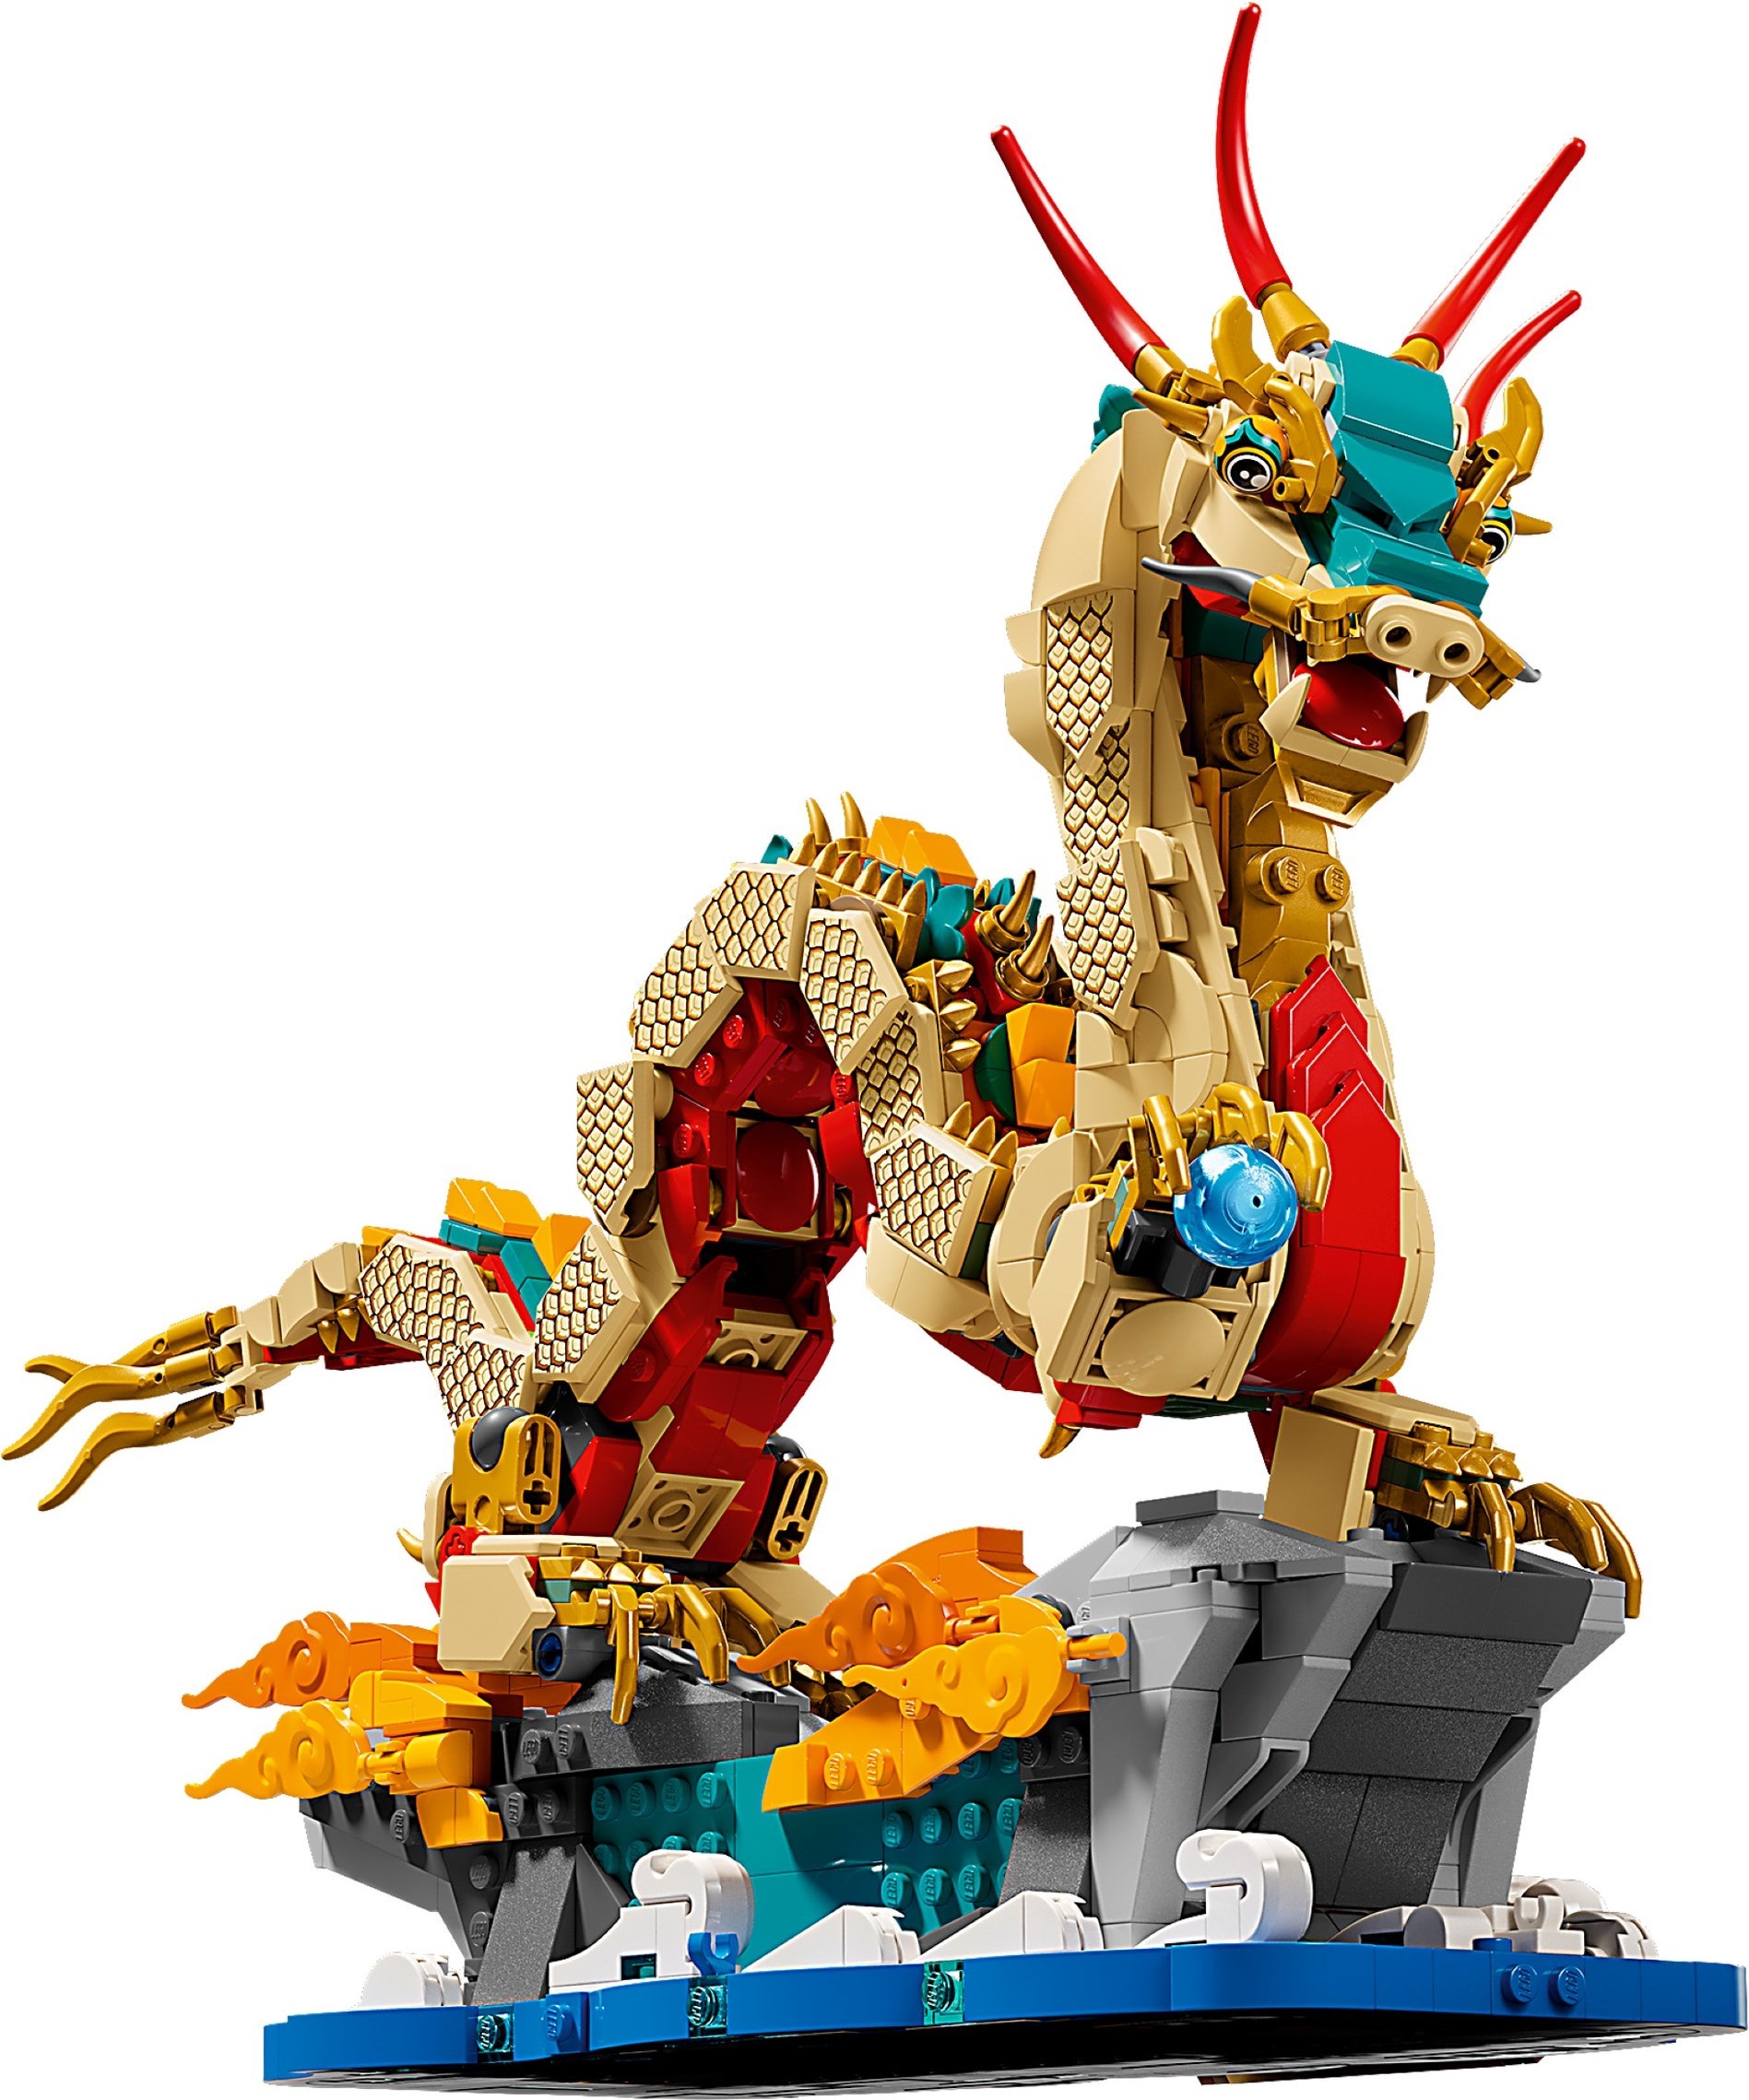 80112 Lego Seasonal Chinese Traditional Festival Auspicious Dragon- Rồng Giáp Thìn may mắn 2024